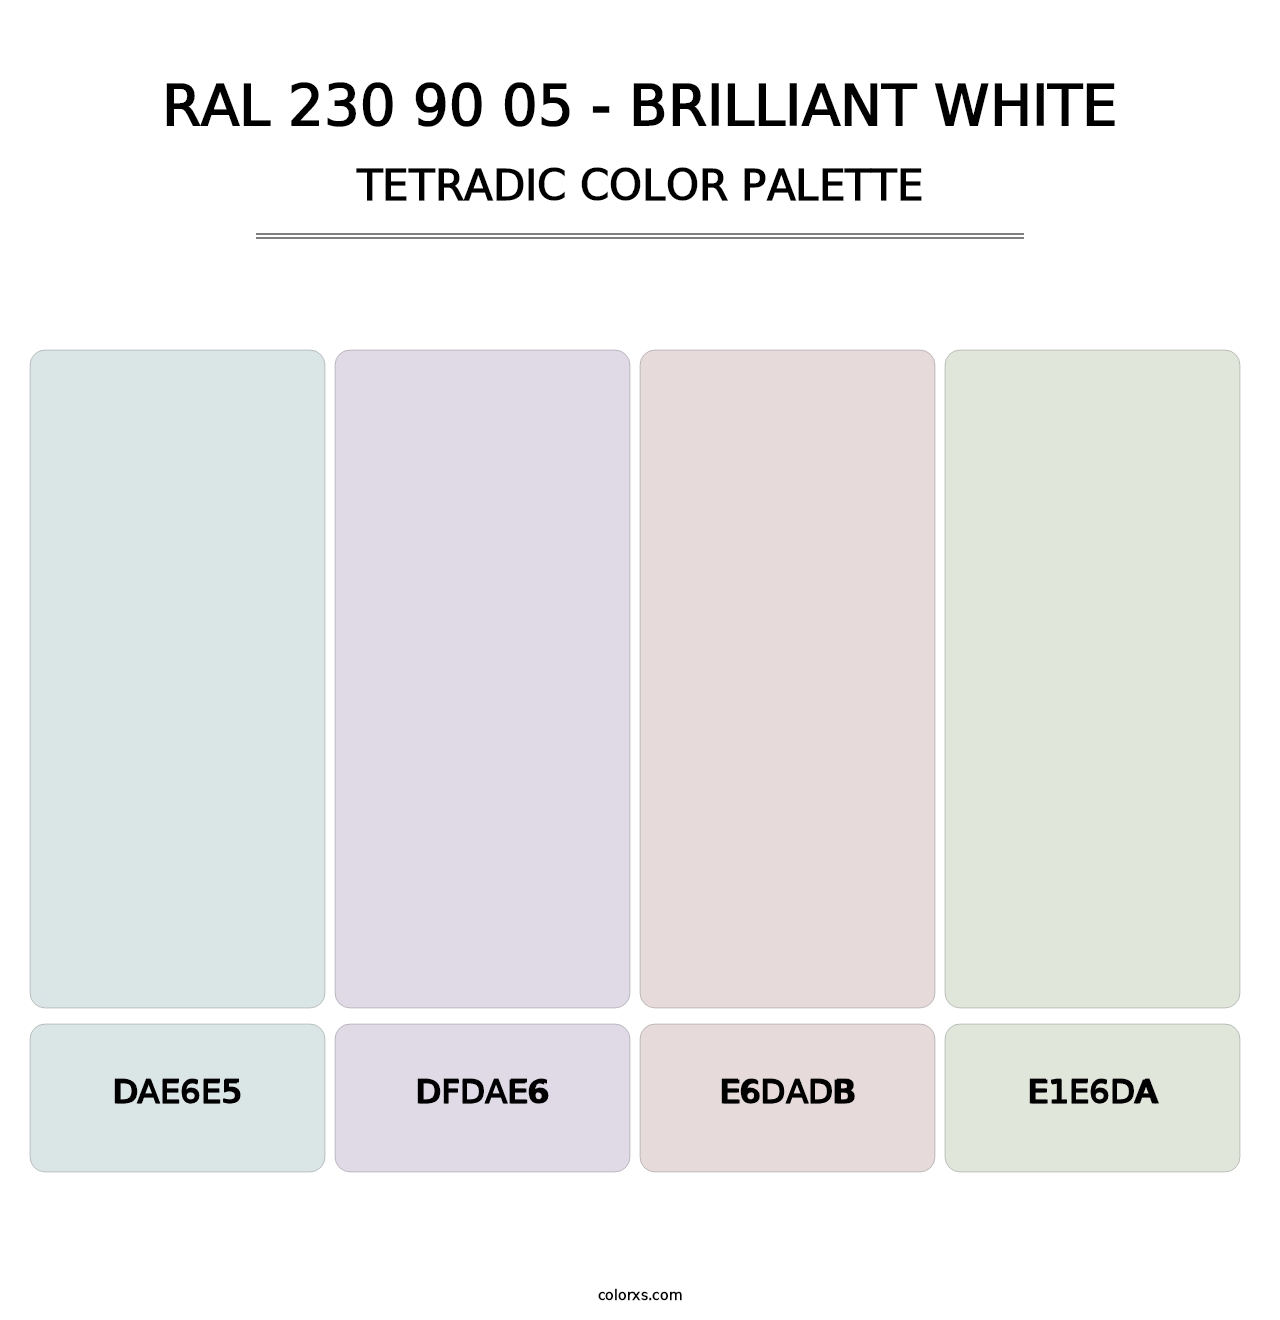 RAL 230 90 05 - Brilliant White - Tetradic Color Palette